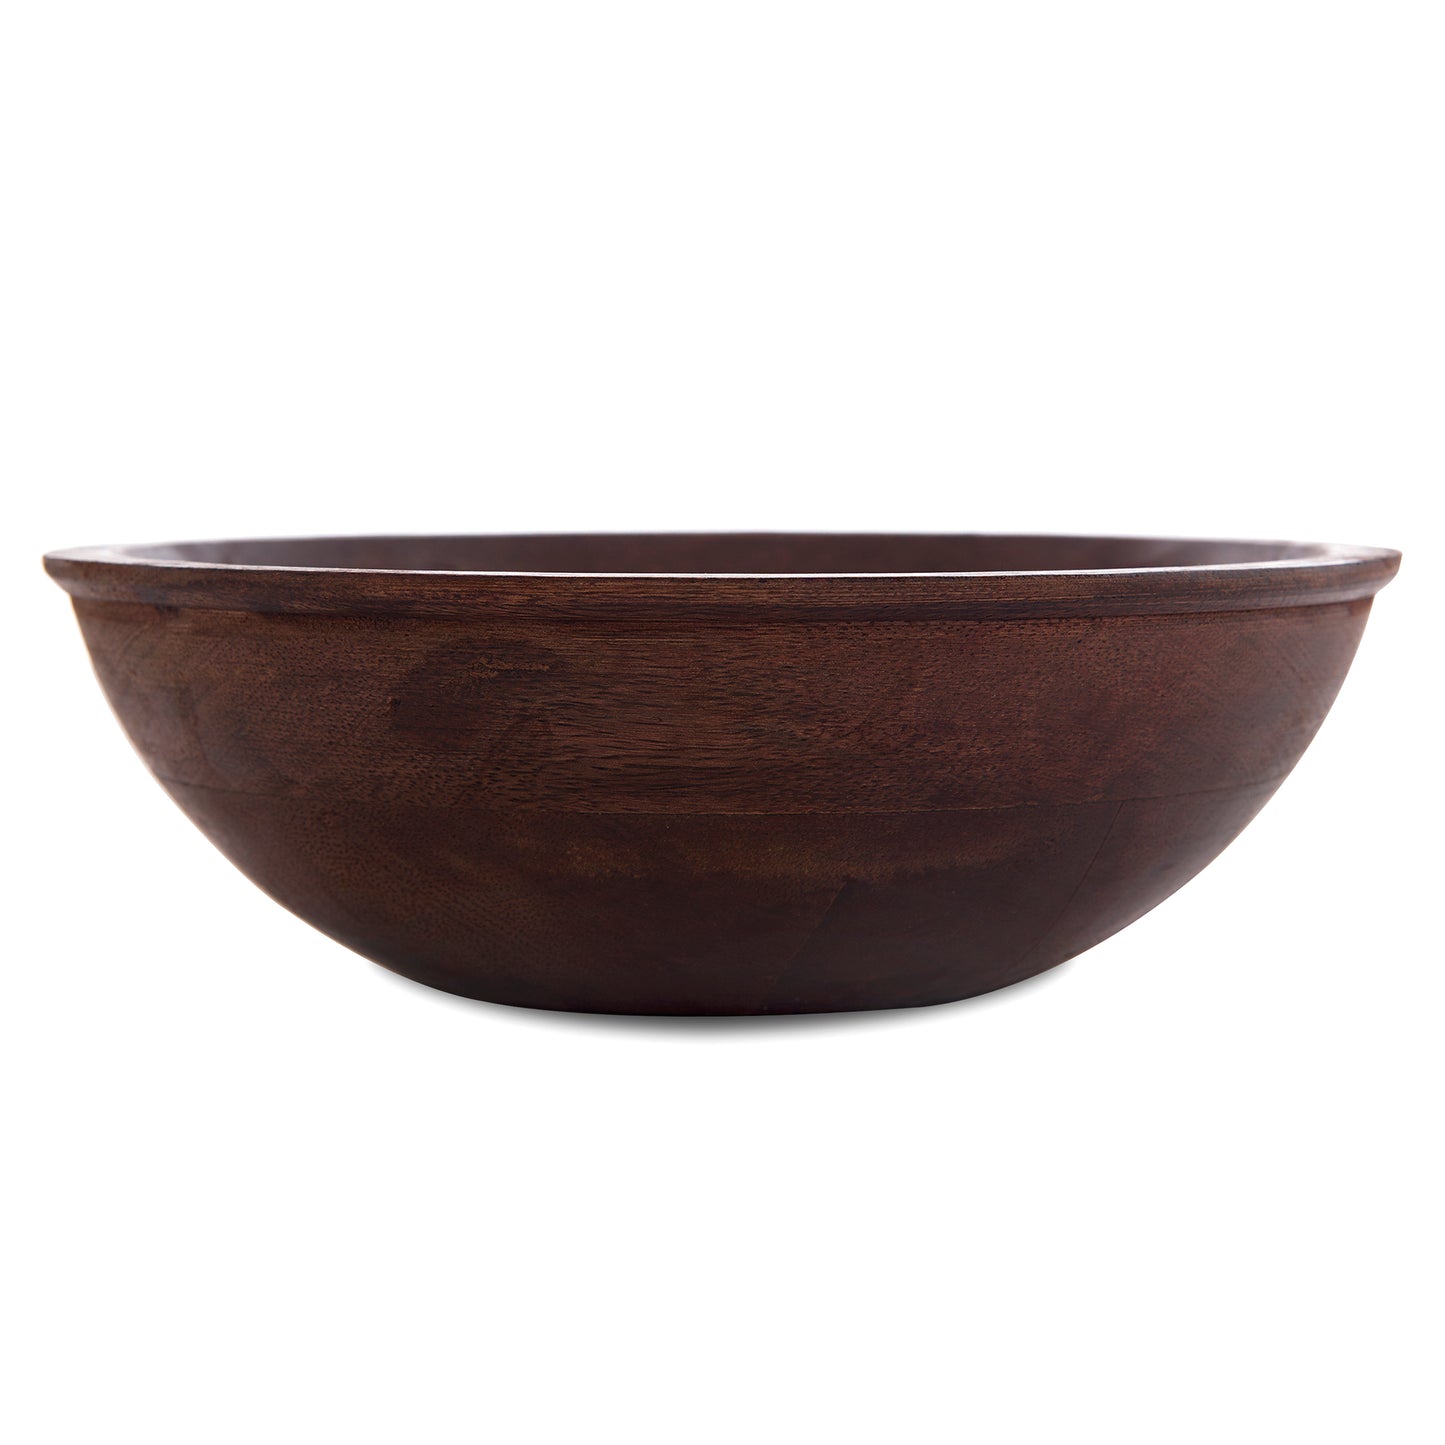 Wooden bowl flat small, Walnut finish, fruit & snack serving bowl